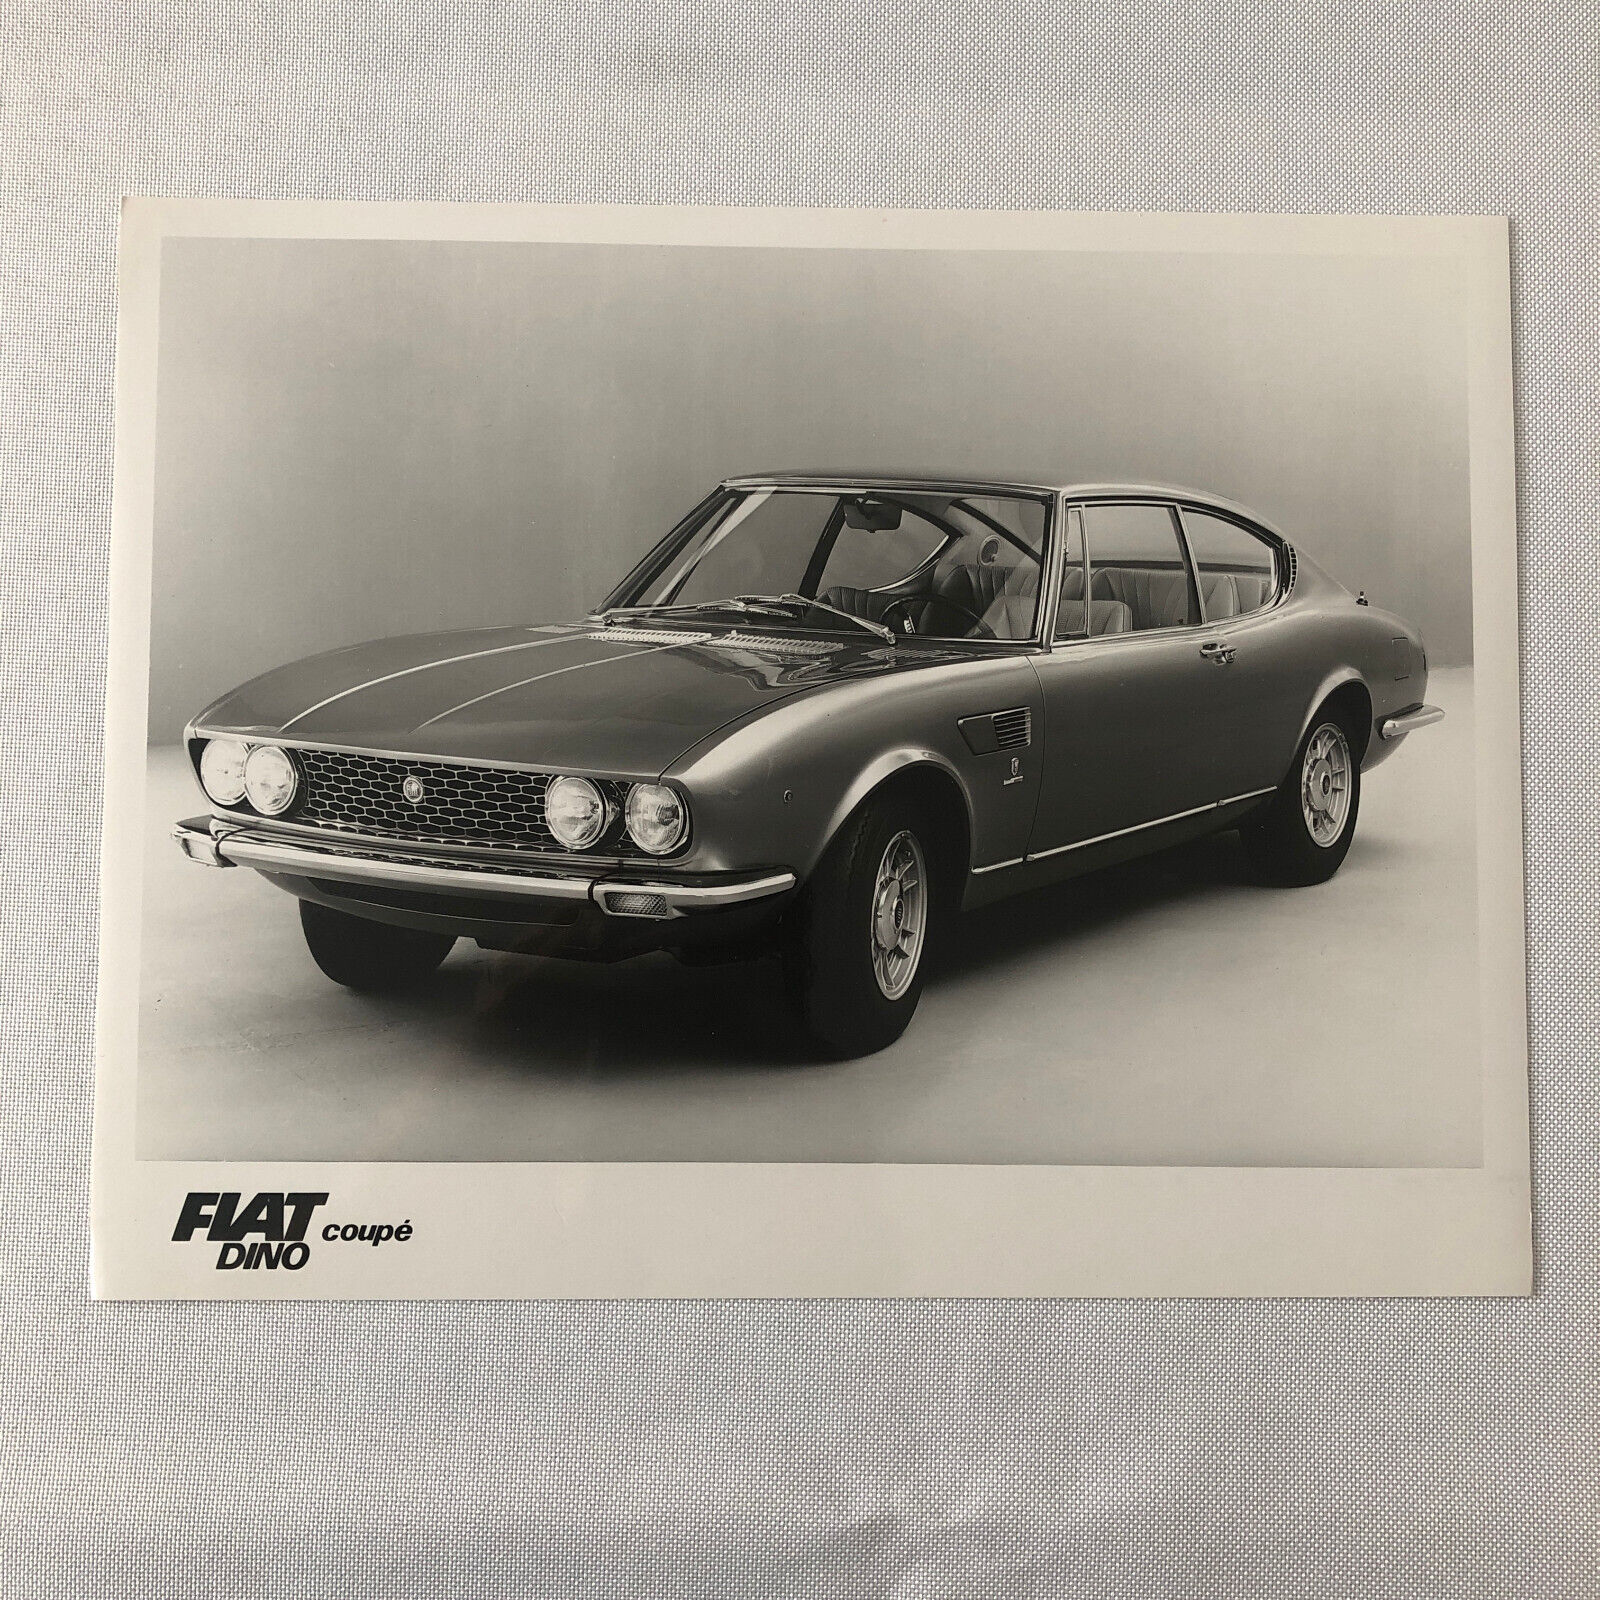 Fiat Dino Coupe Factory Press Photo Photograph